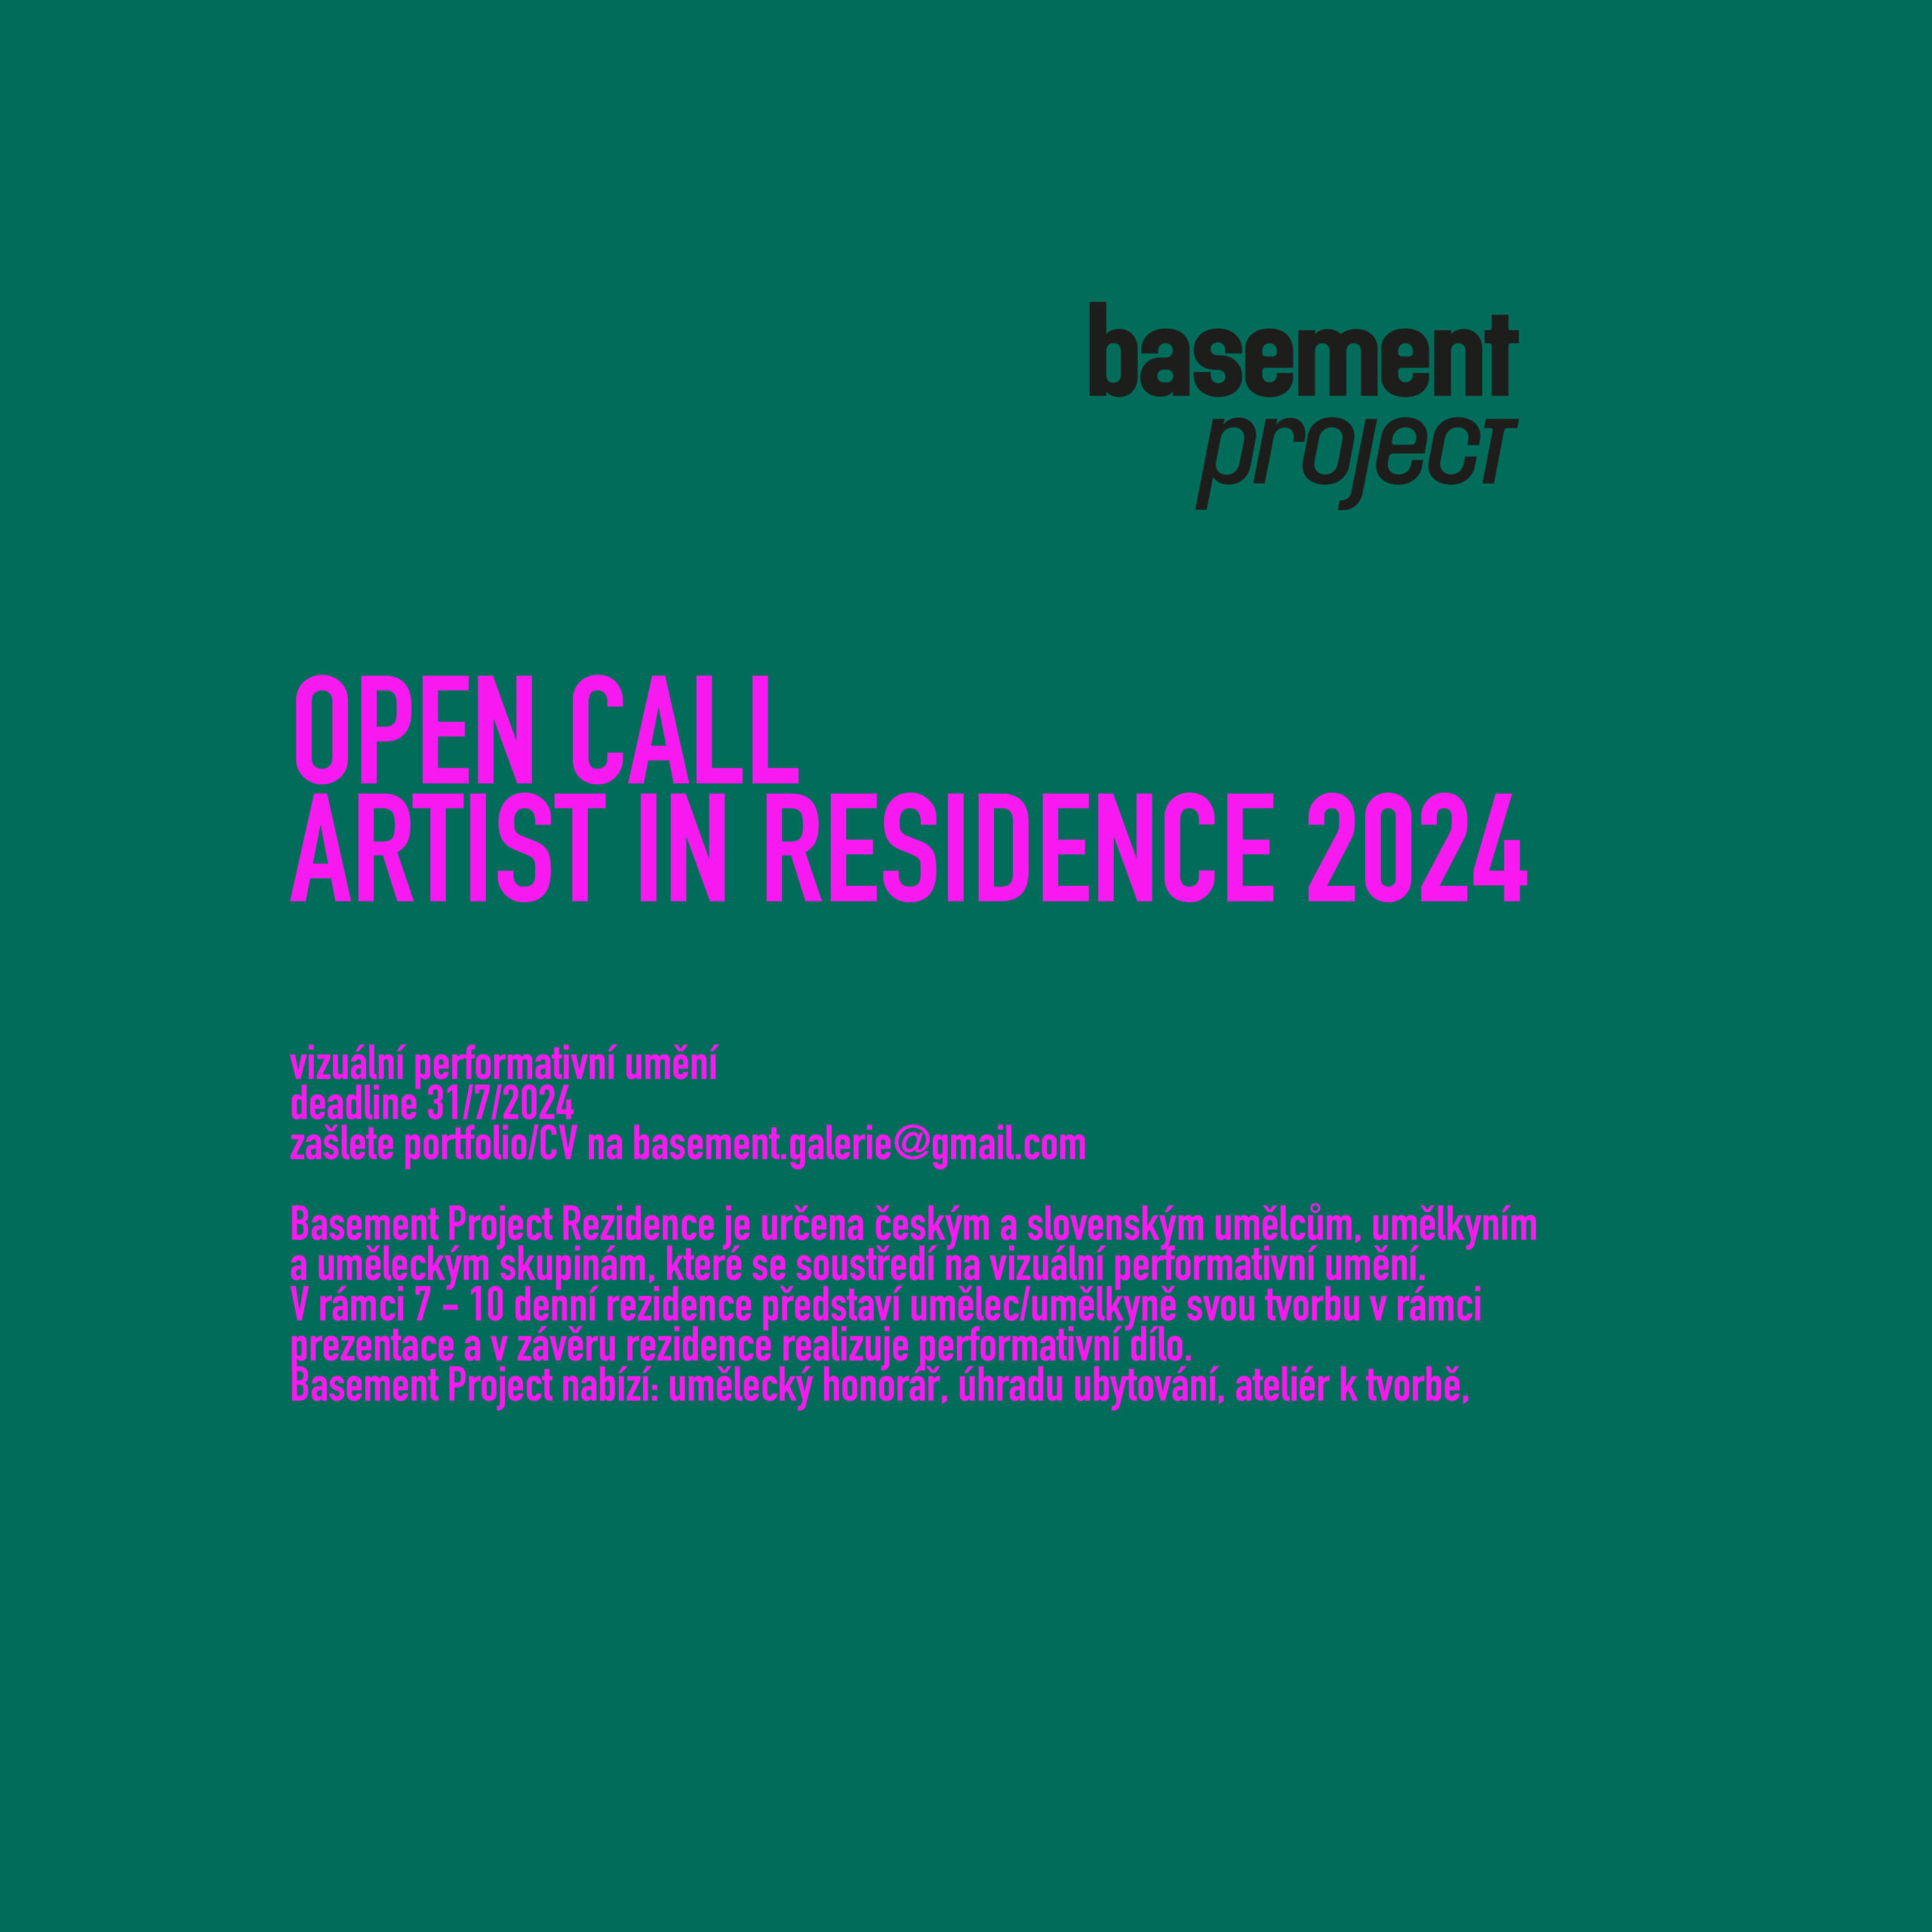 Open Call: Artist in residence 2024